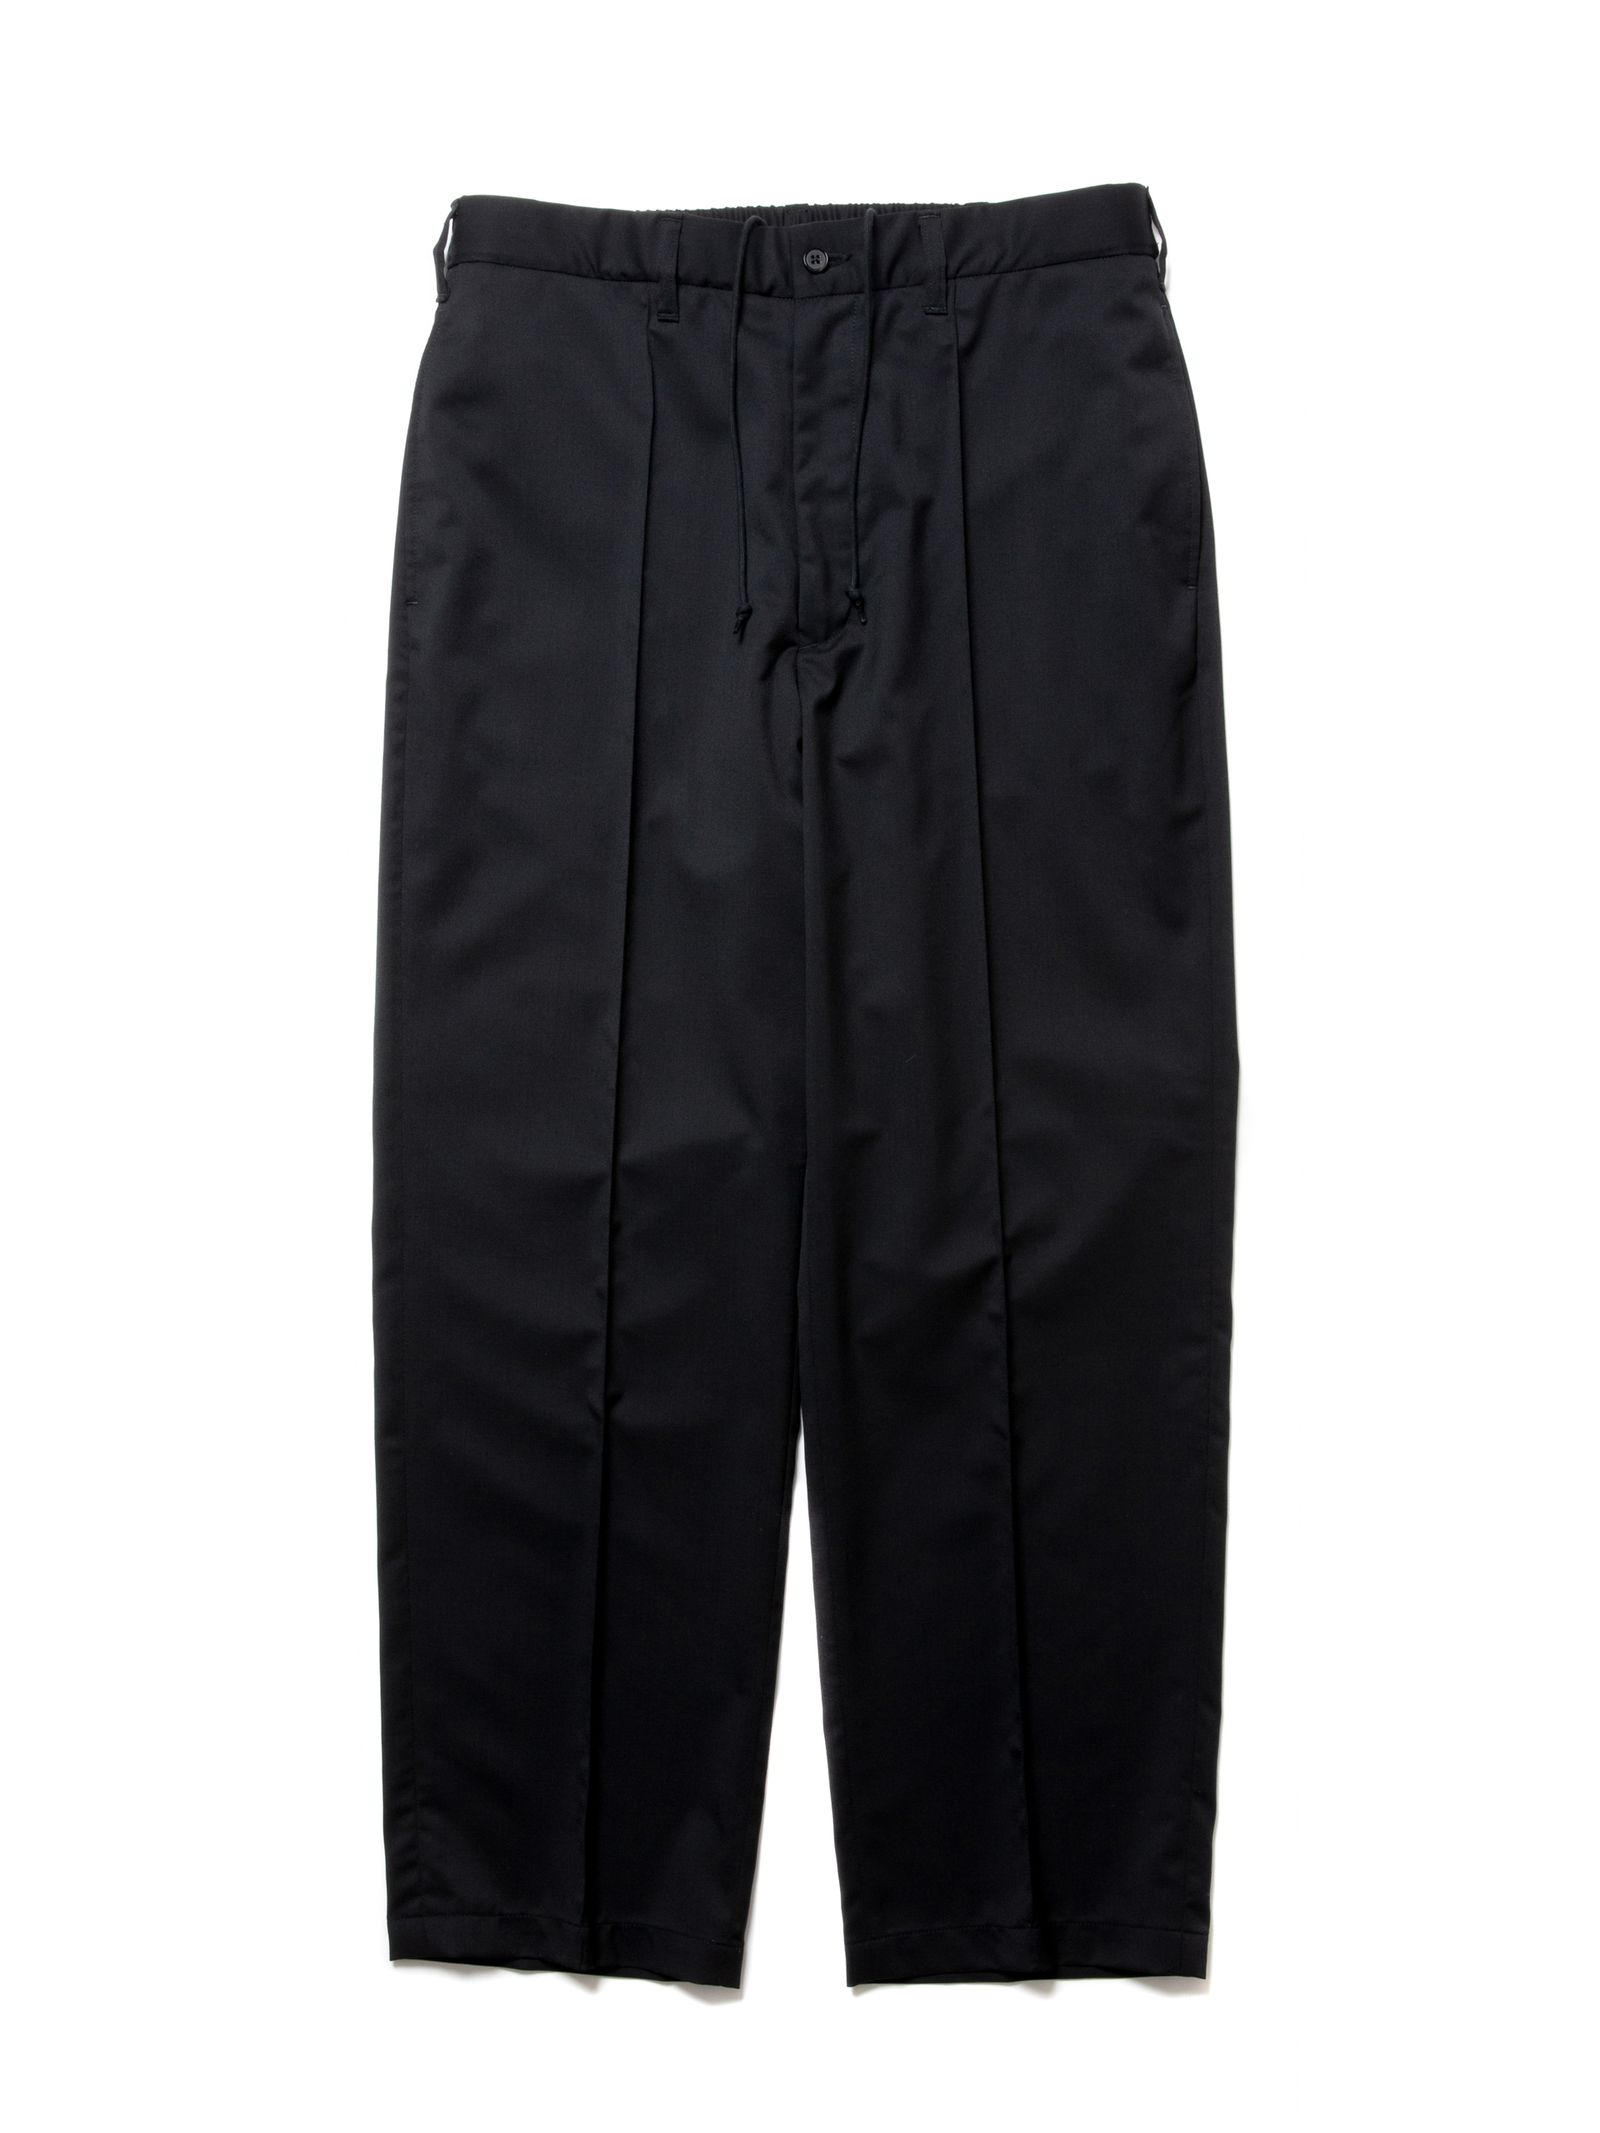 Combat Wool Twill Pin Tuck Easy Trousers / Black / イージーパンツ - S